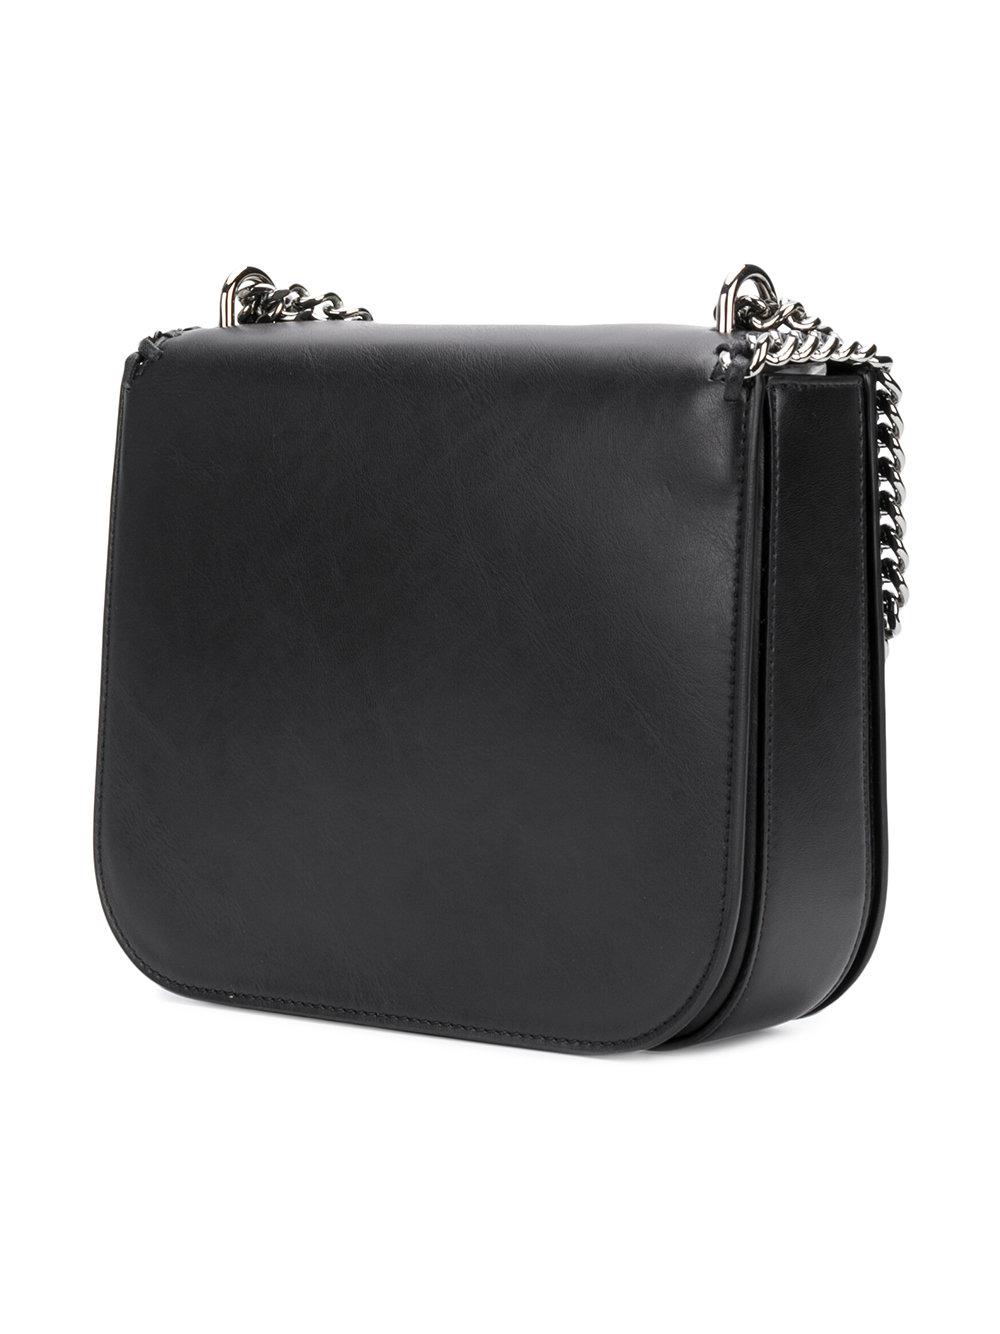 Stella McCartney Falabella Box Stars Shoulder Bag in Black | Lyst